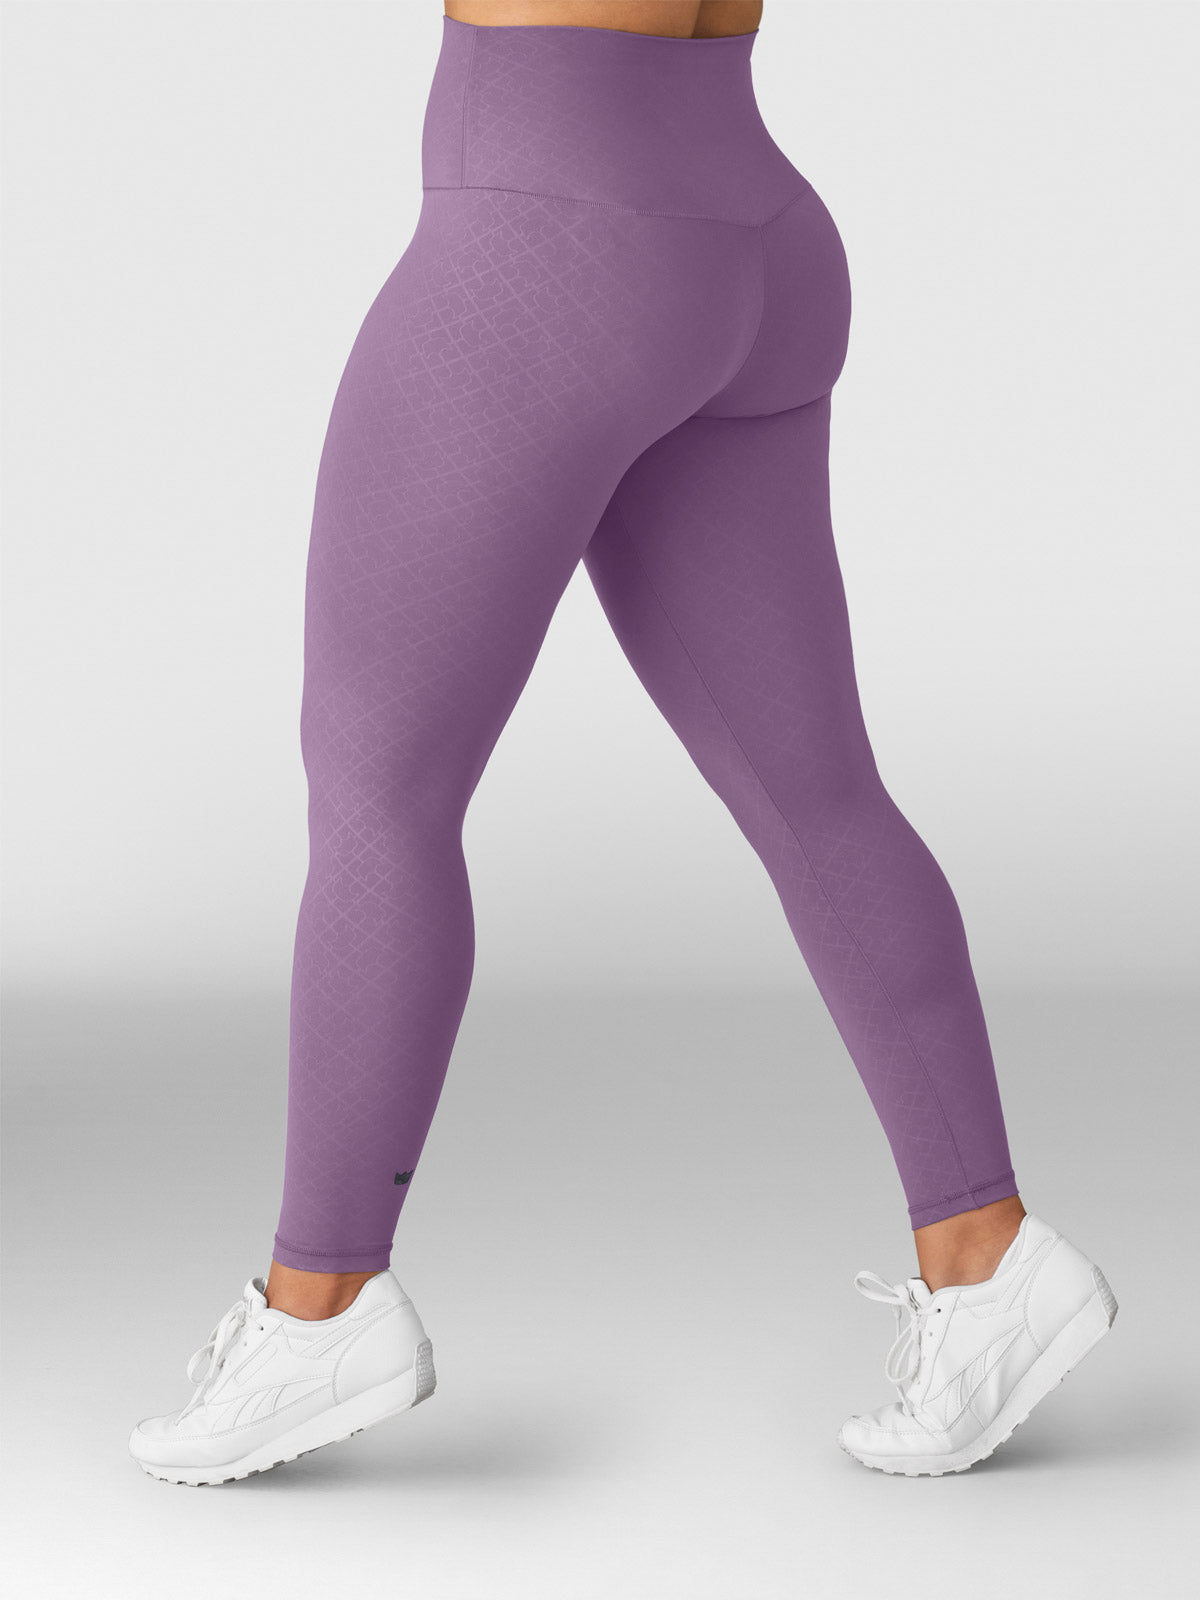 my MOST flattering gym leggings  gymshark, oner active, NVGTN and